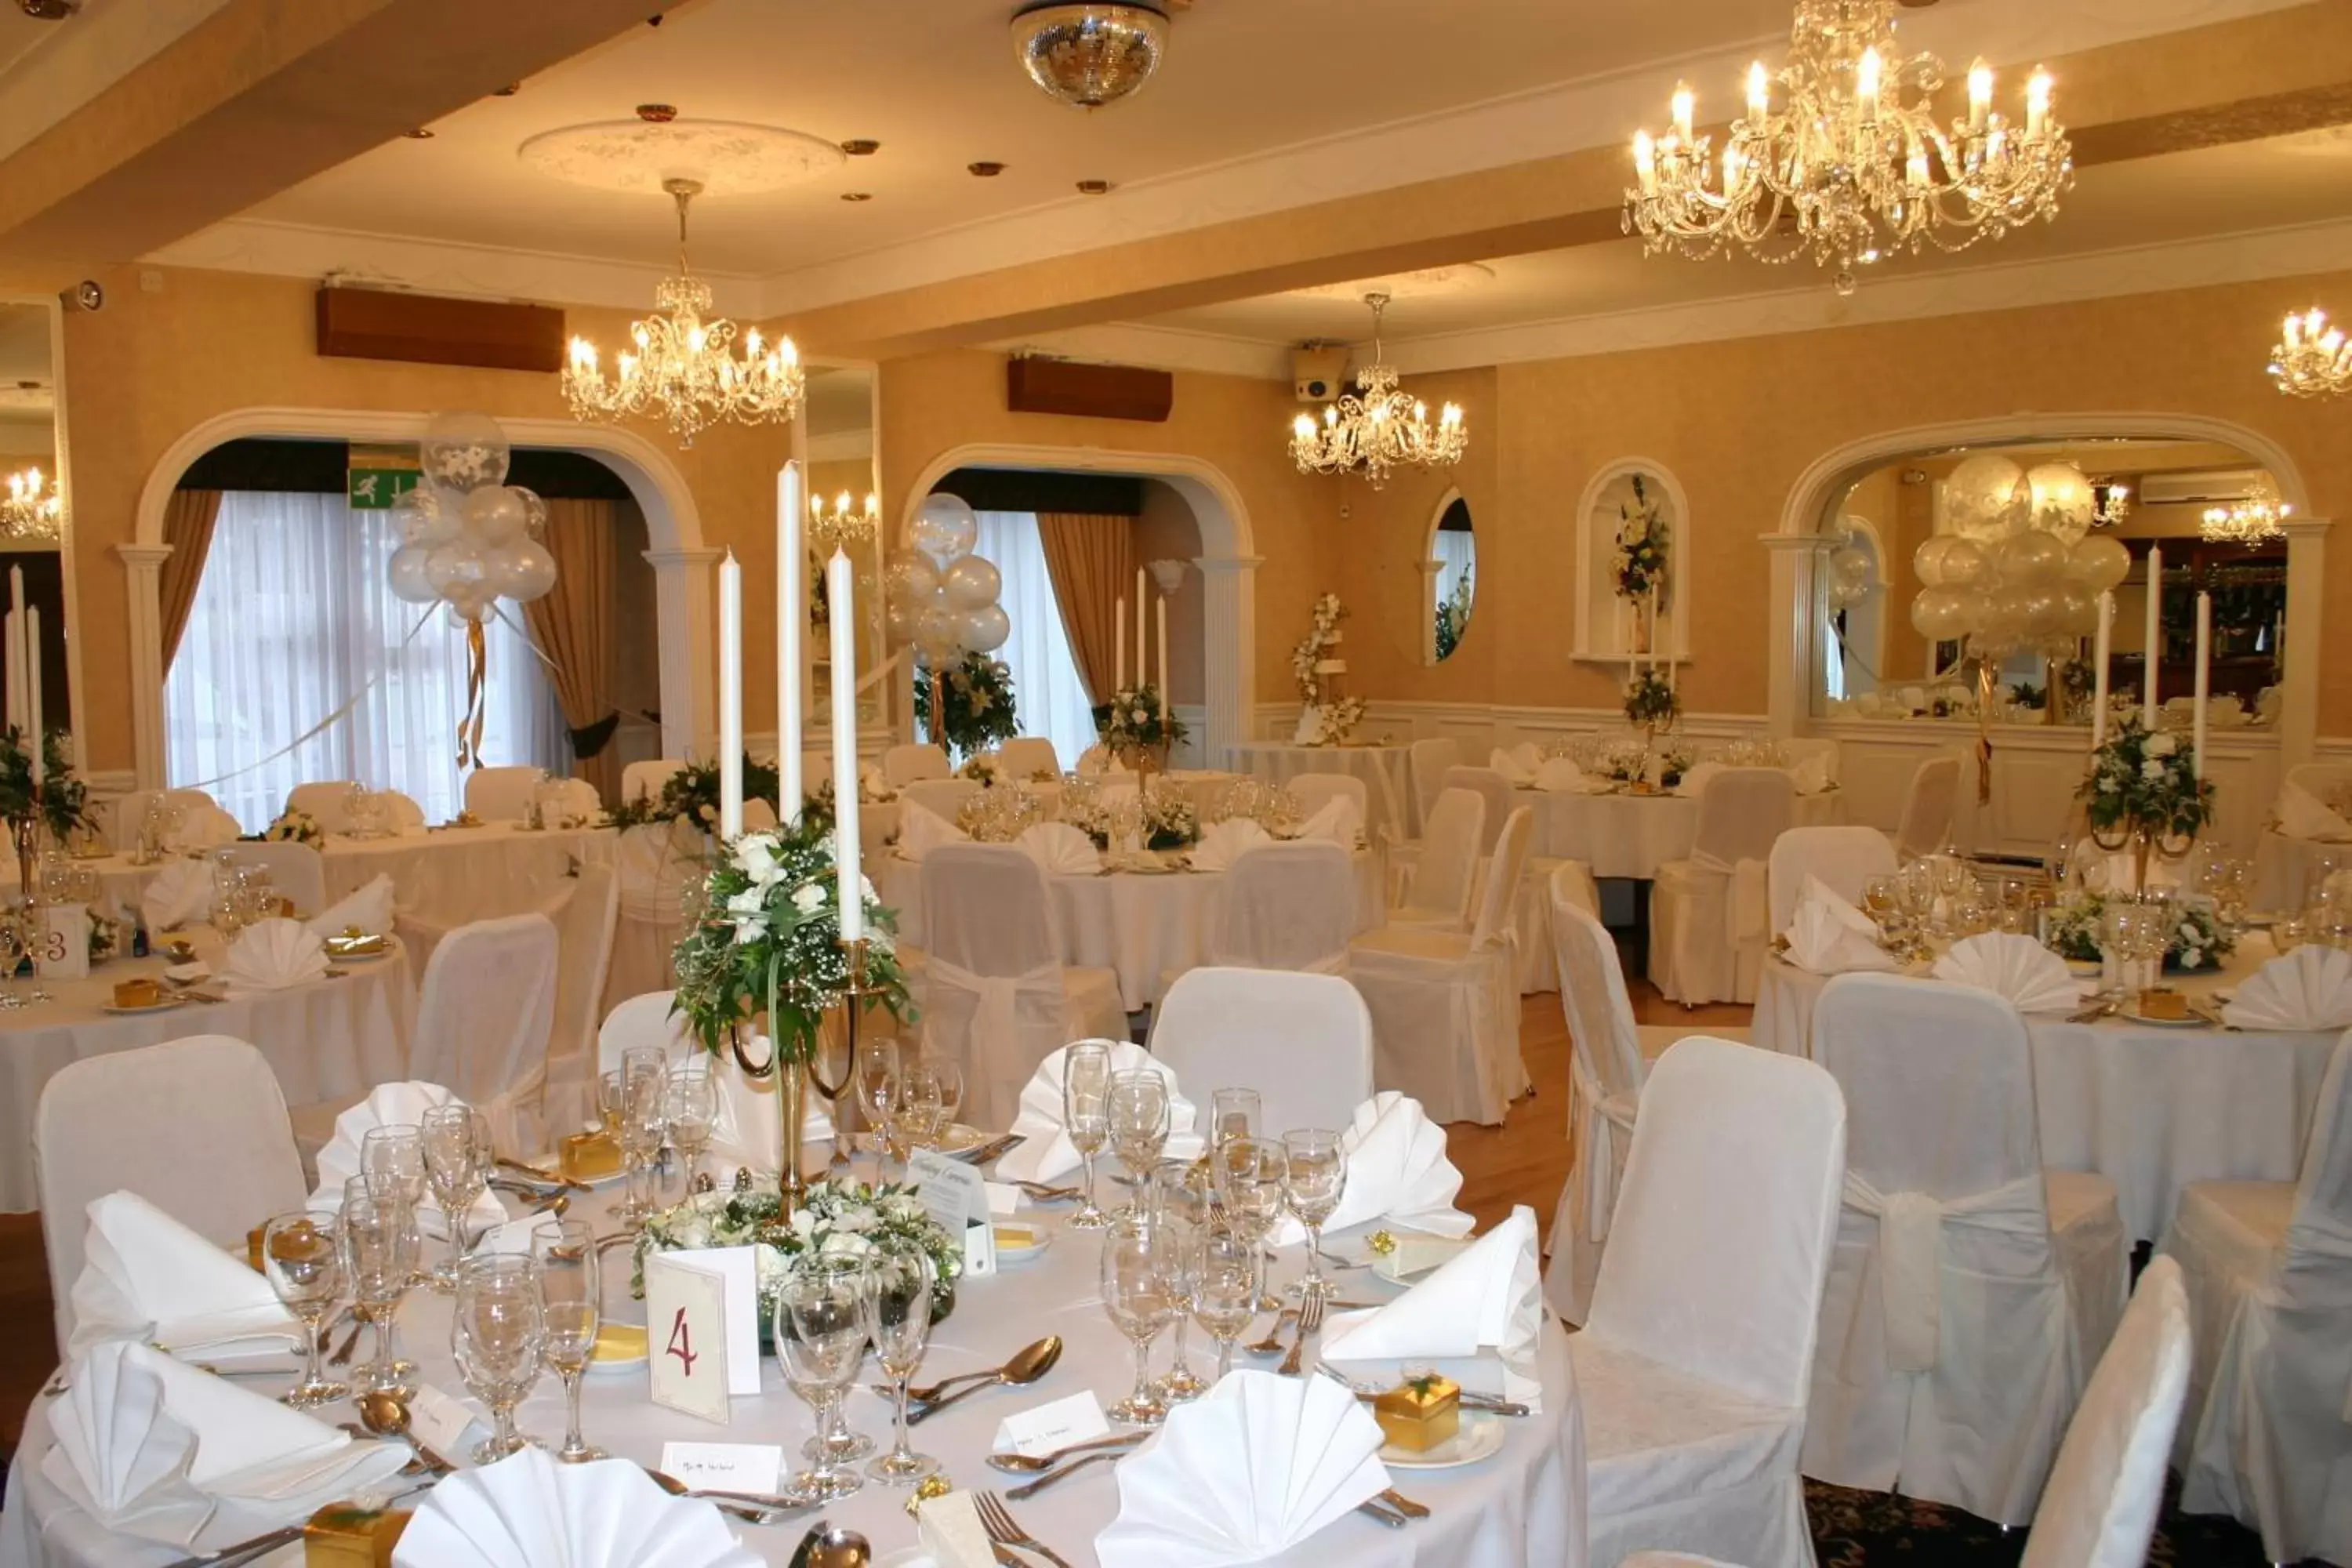 Banquet/Function facilities, Banquet Facilities in Revelstoke Hotel